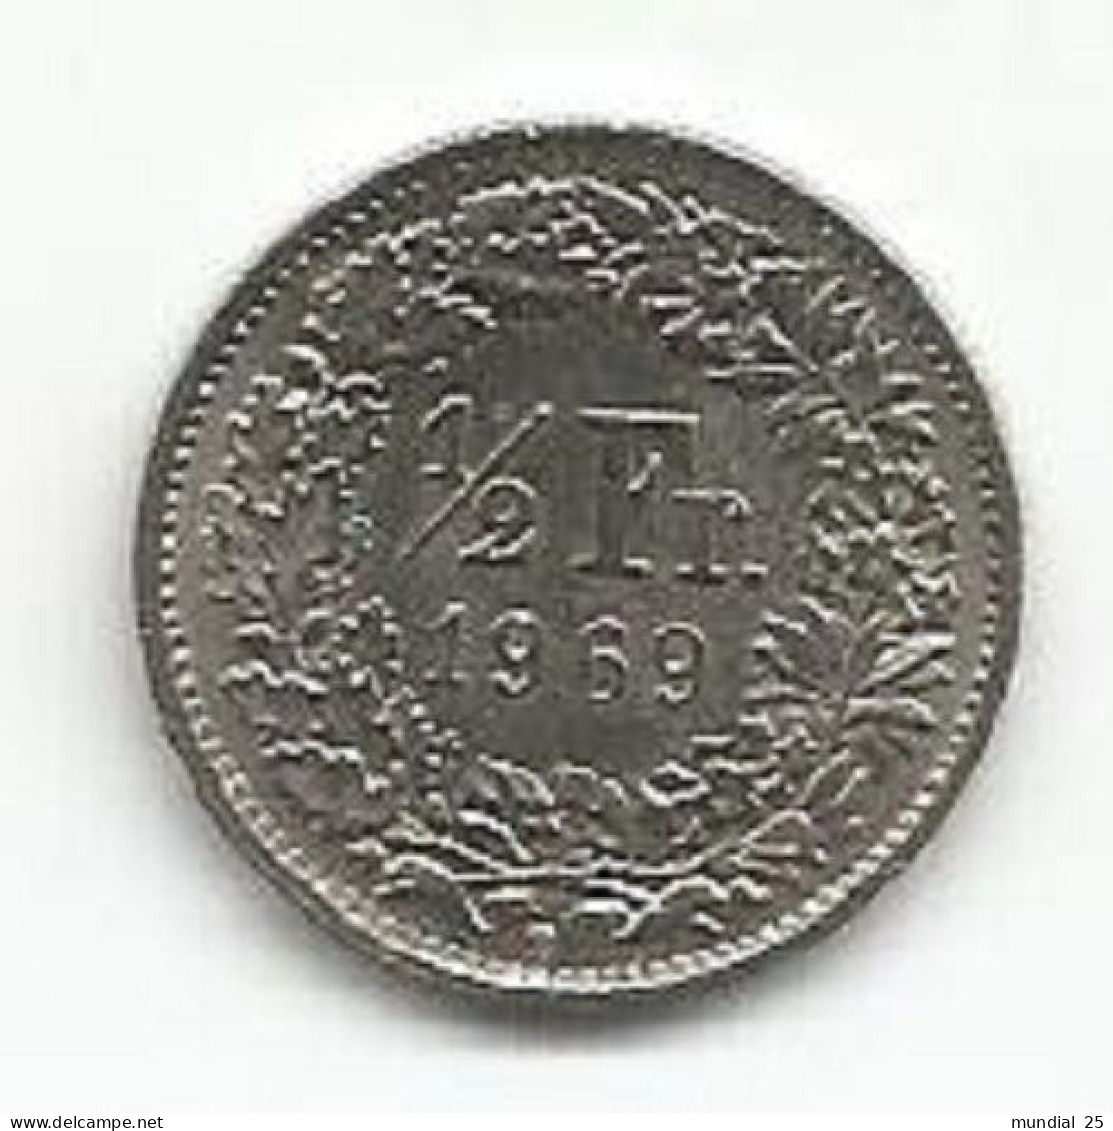 SWITZERLAND 1/2 FRANC 1969 B - 1/2 Franken